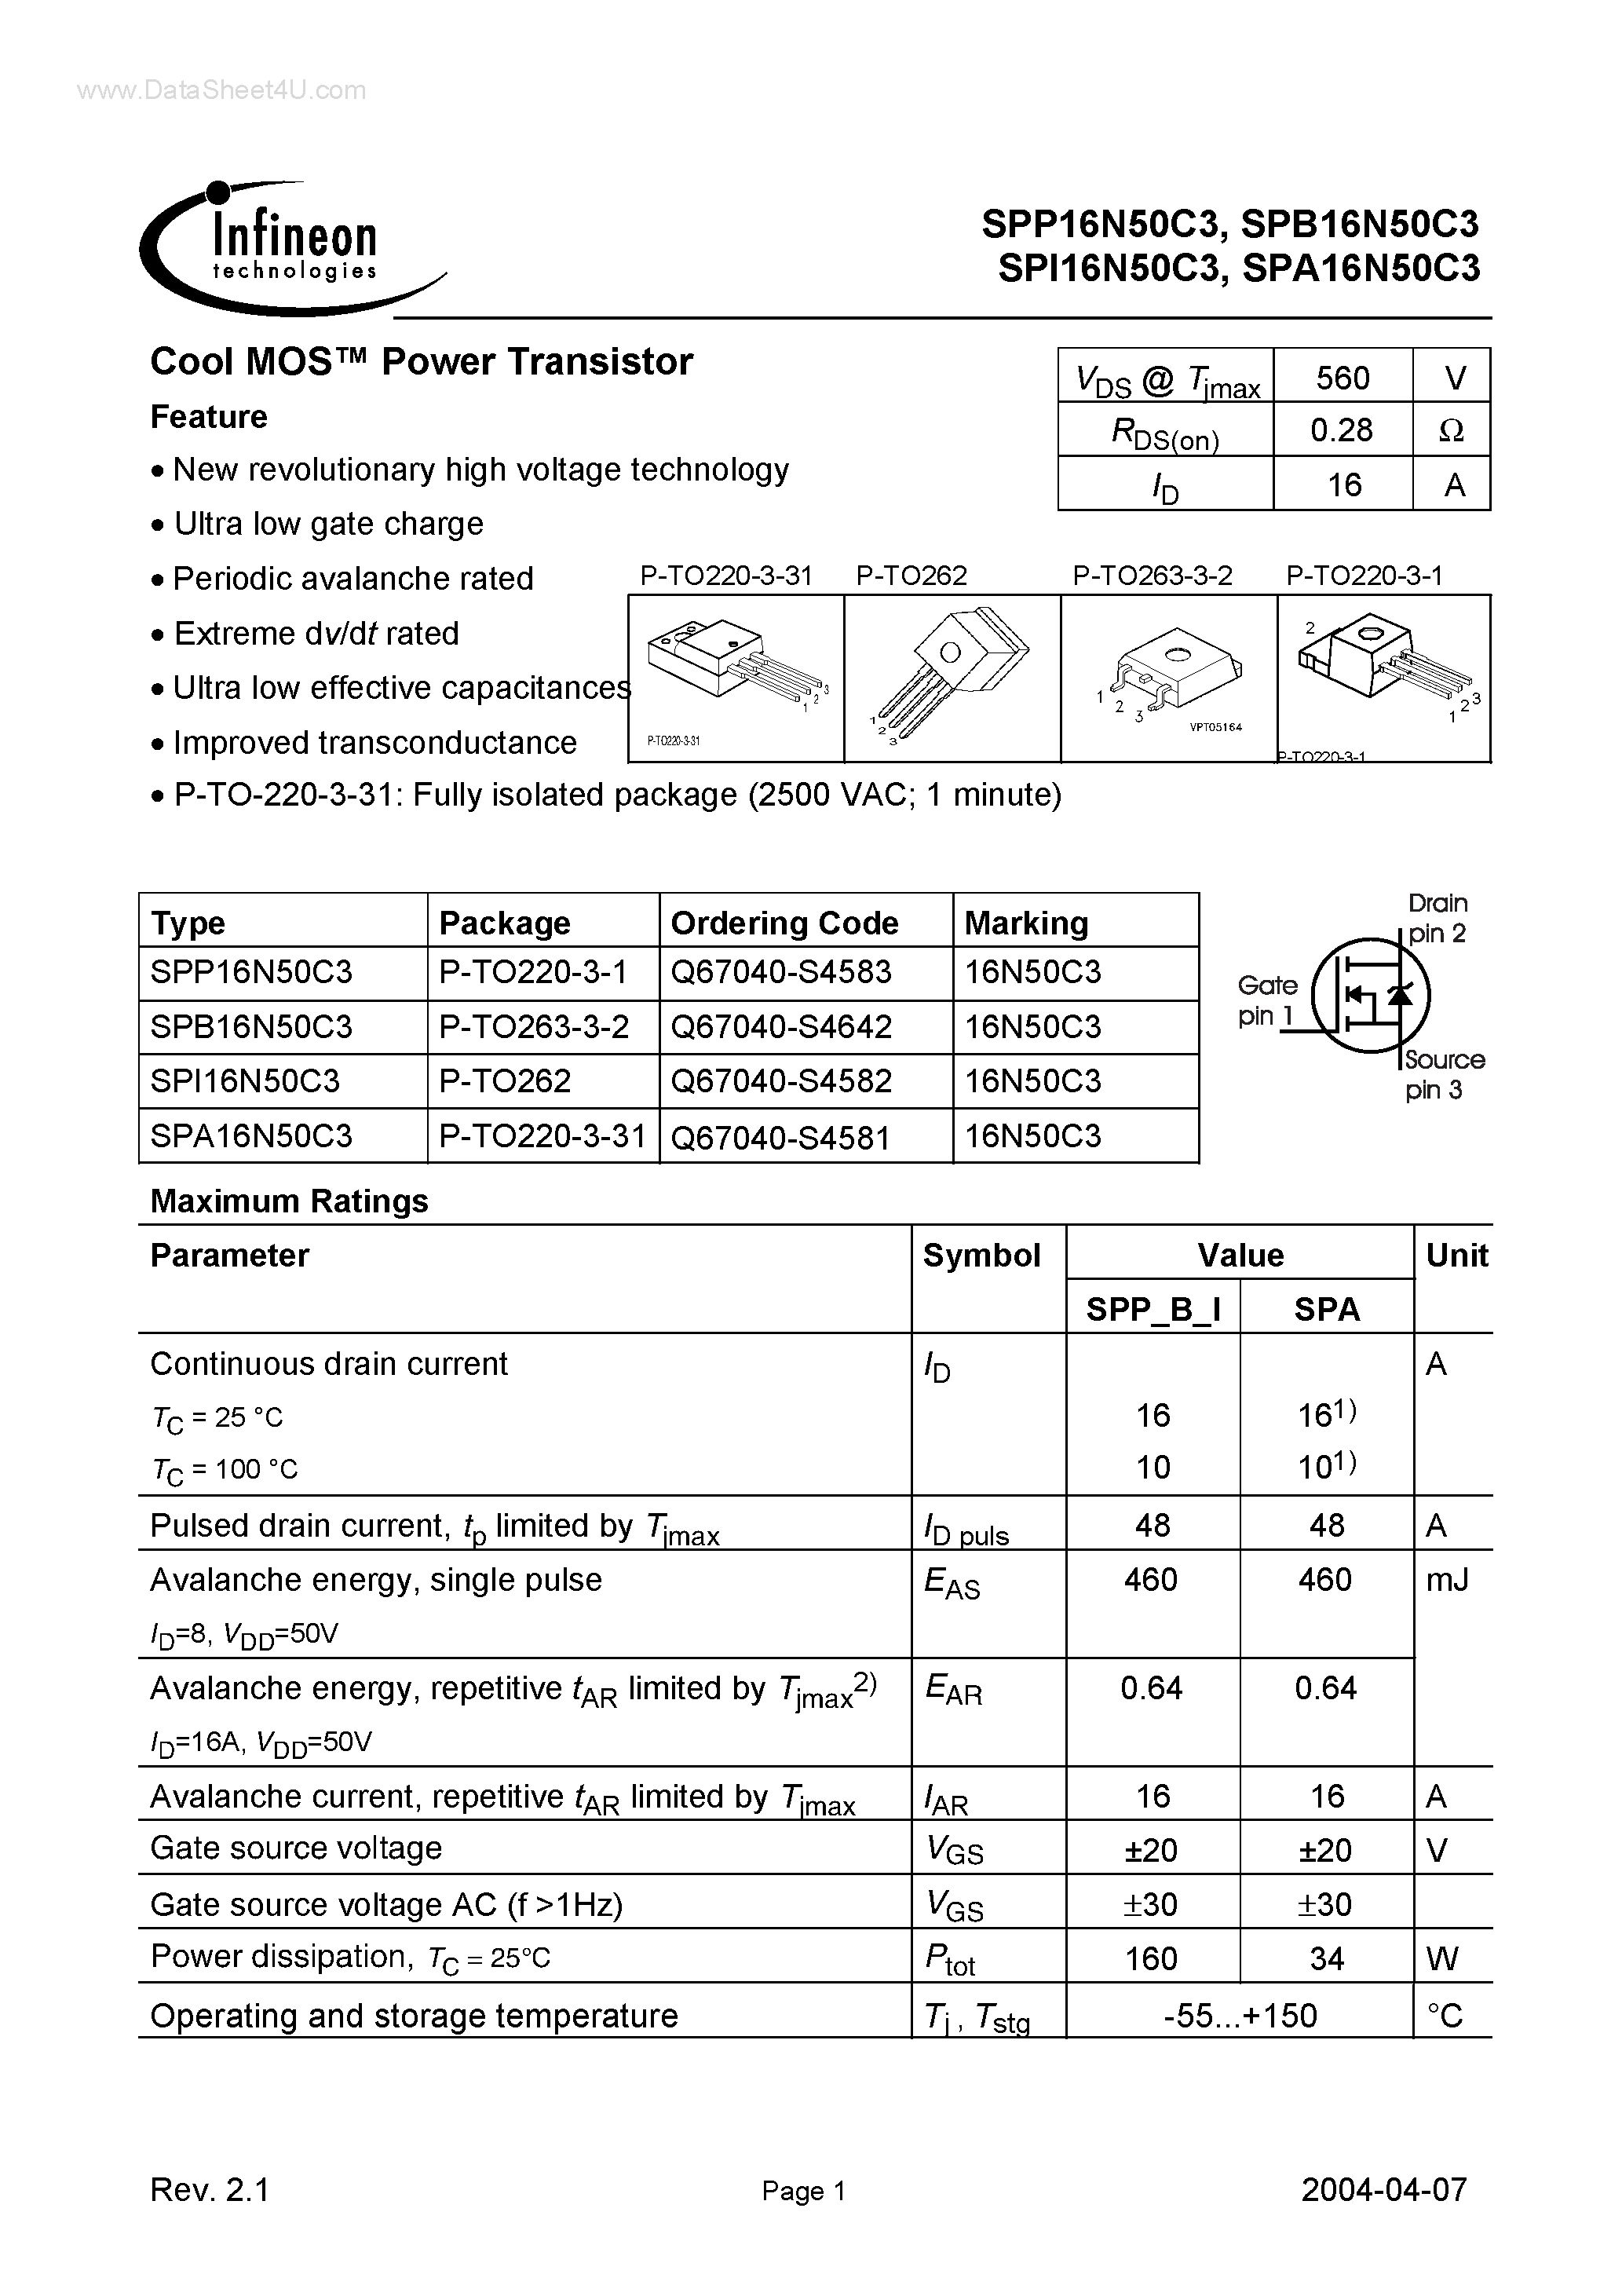 Даташит SPI16N50C3 - Power Transistor страница 1